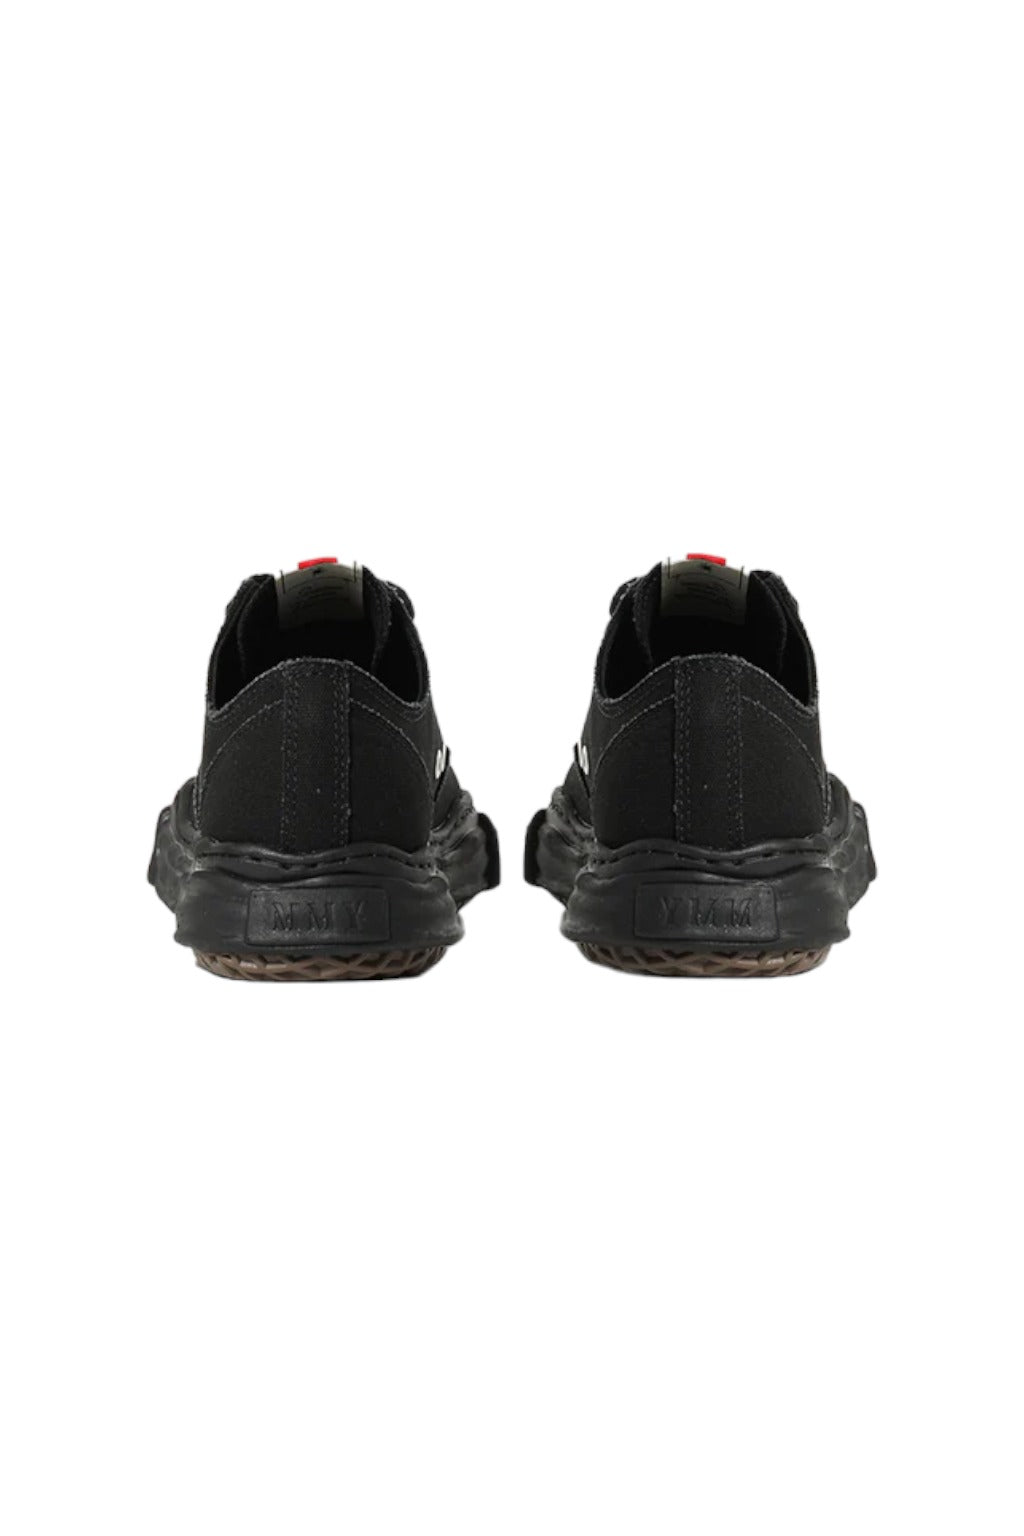 Maison Mihara Yasuhiro Peterson Low-Top Sneakers Black